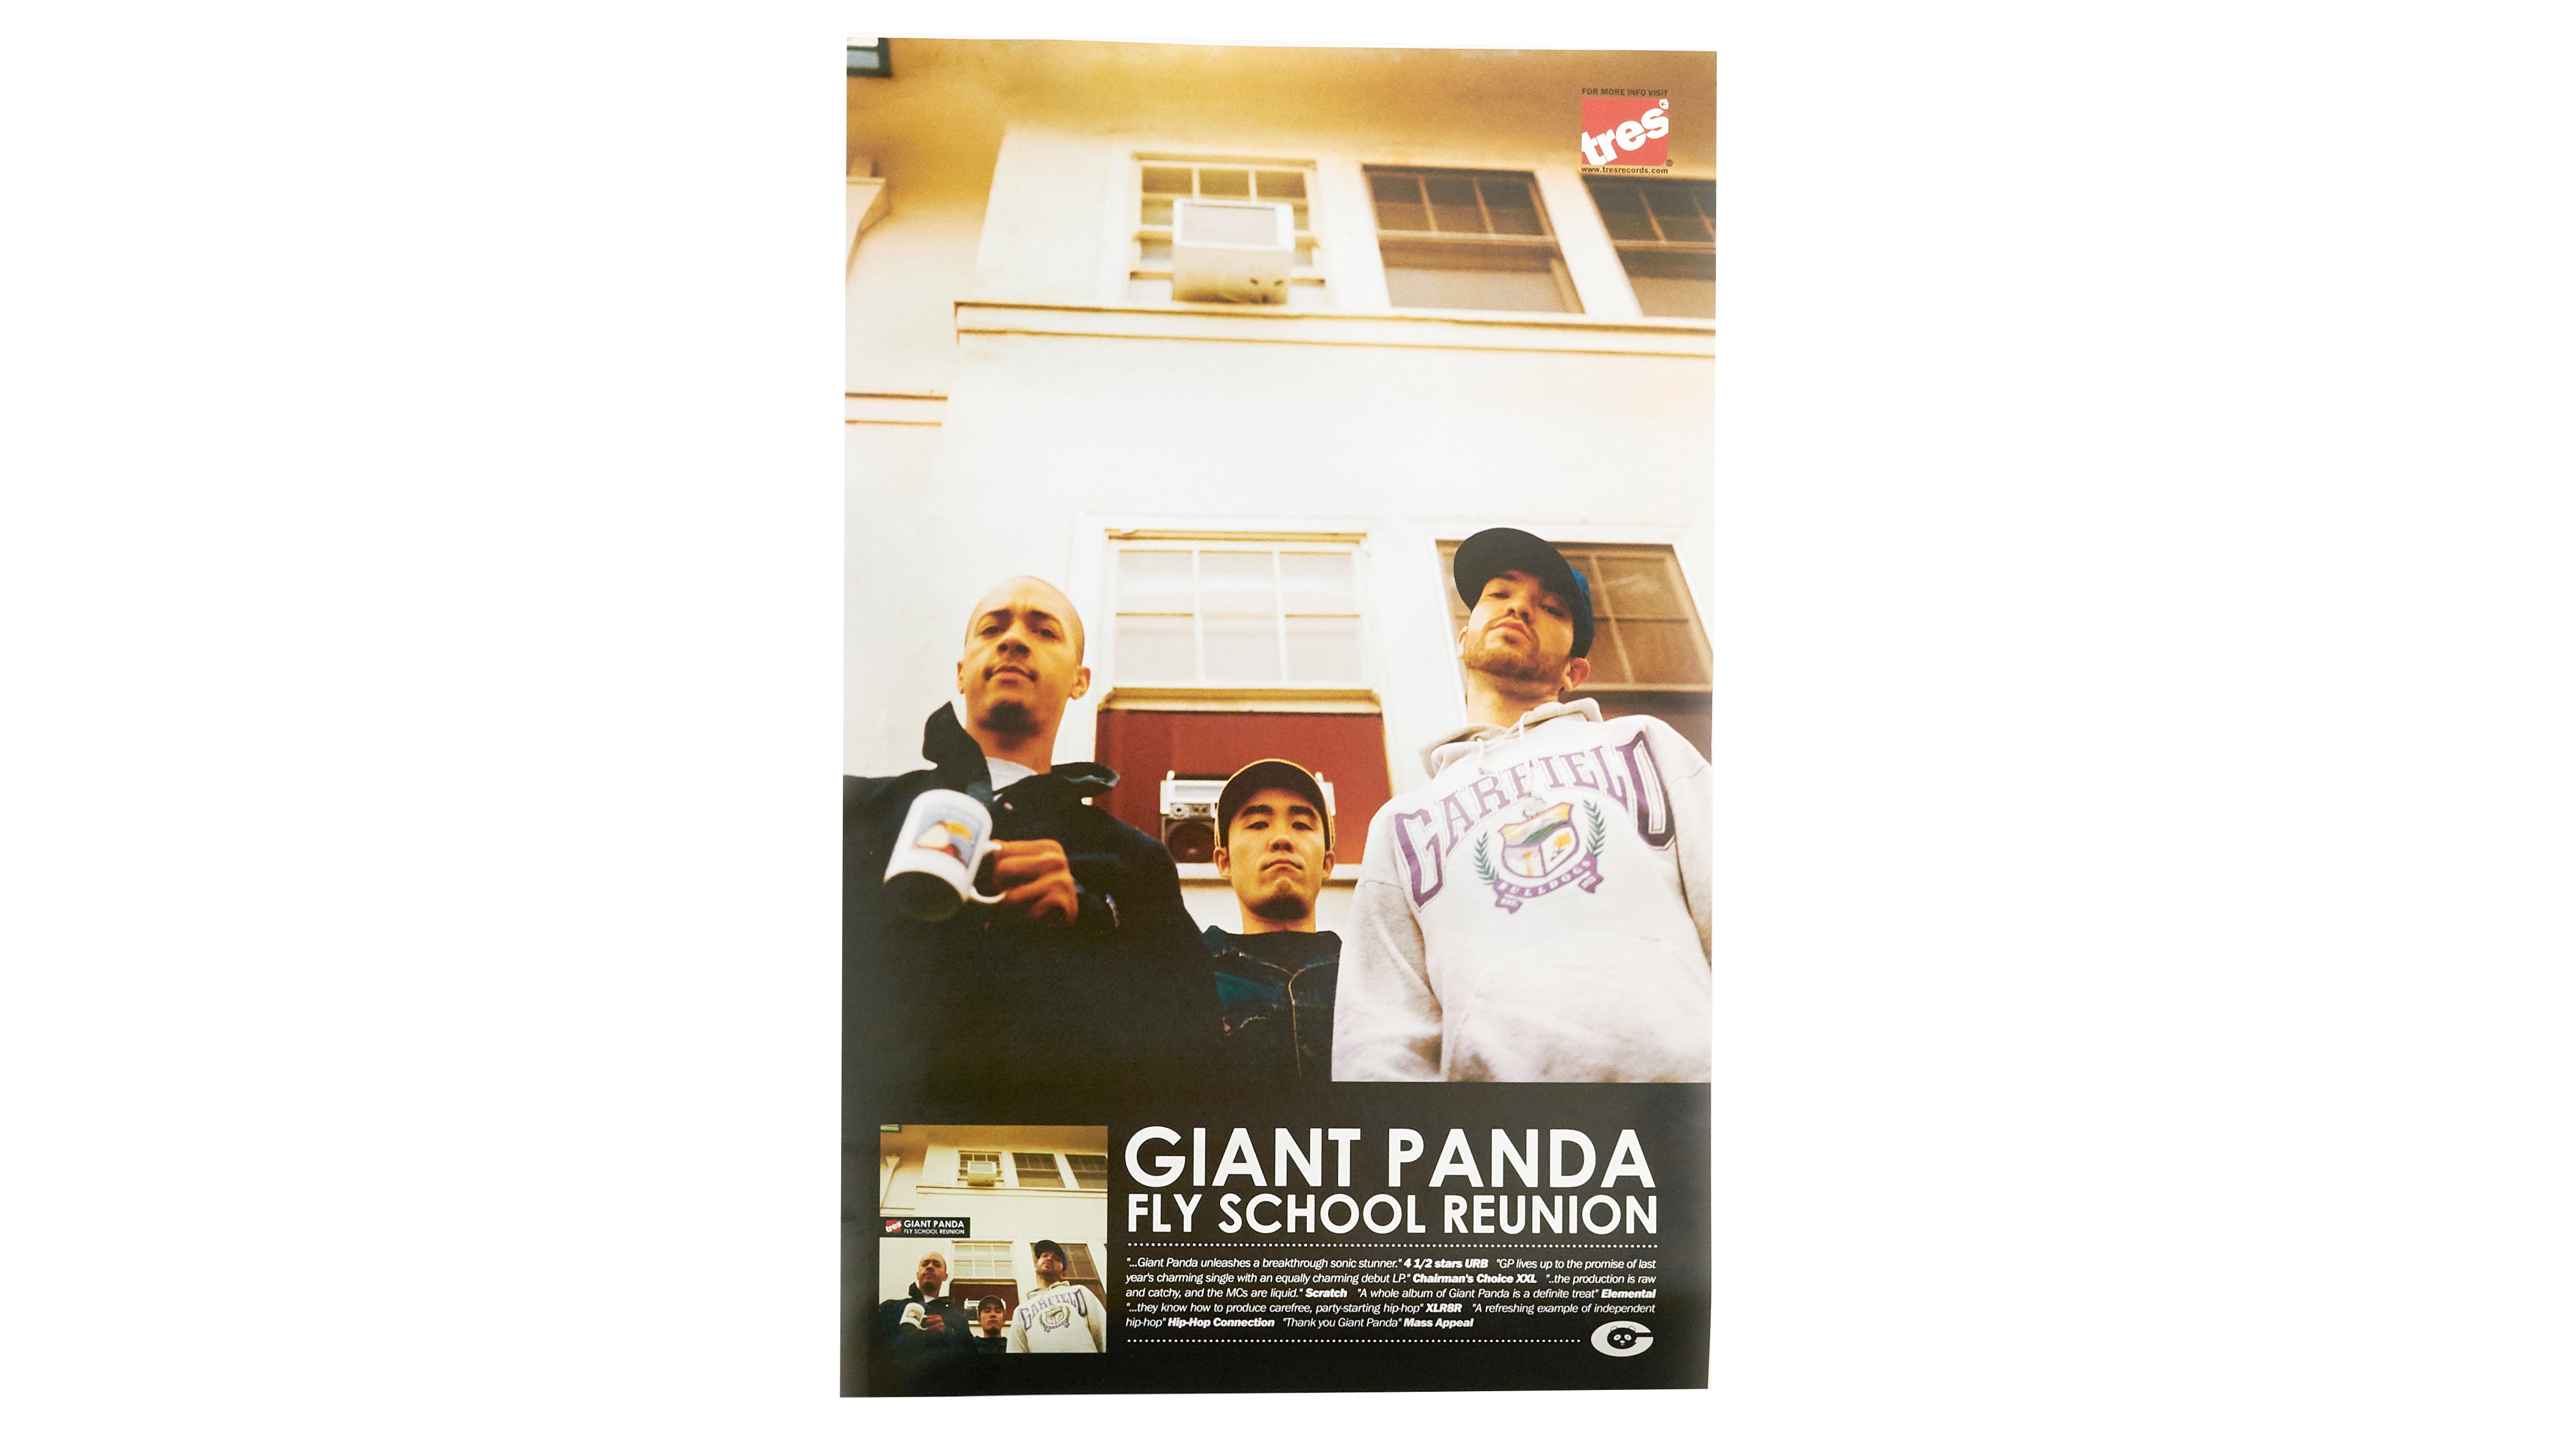 Giant Panda "Fly School Reunion" (Poster)